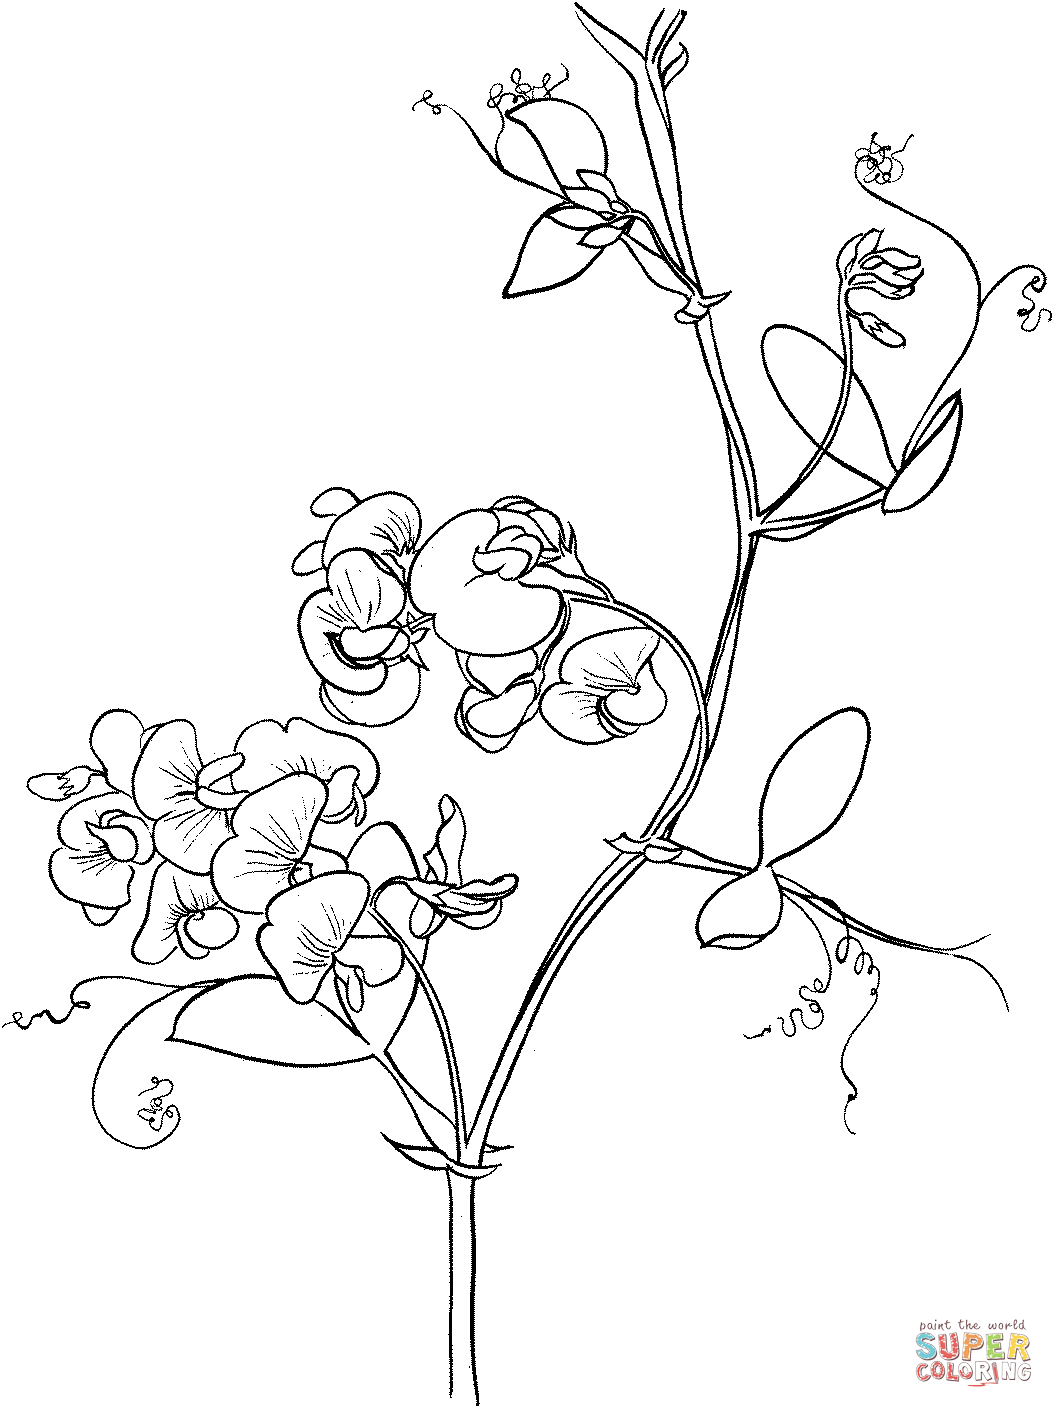 Lathyrus Odoratus oder Edelwicke aus Edelwicke